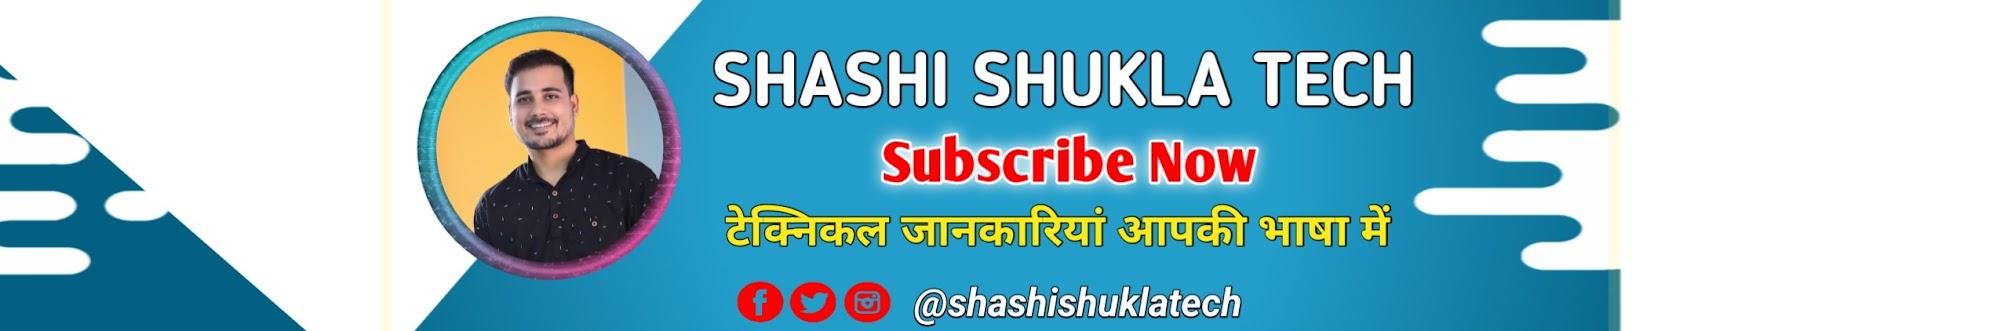 Shashi Shukla Tech